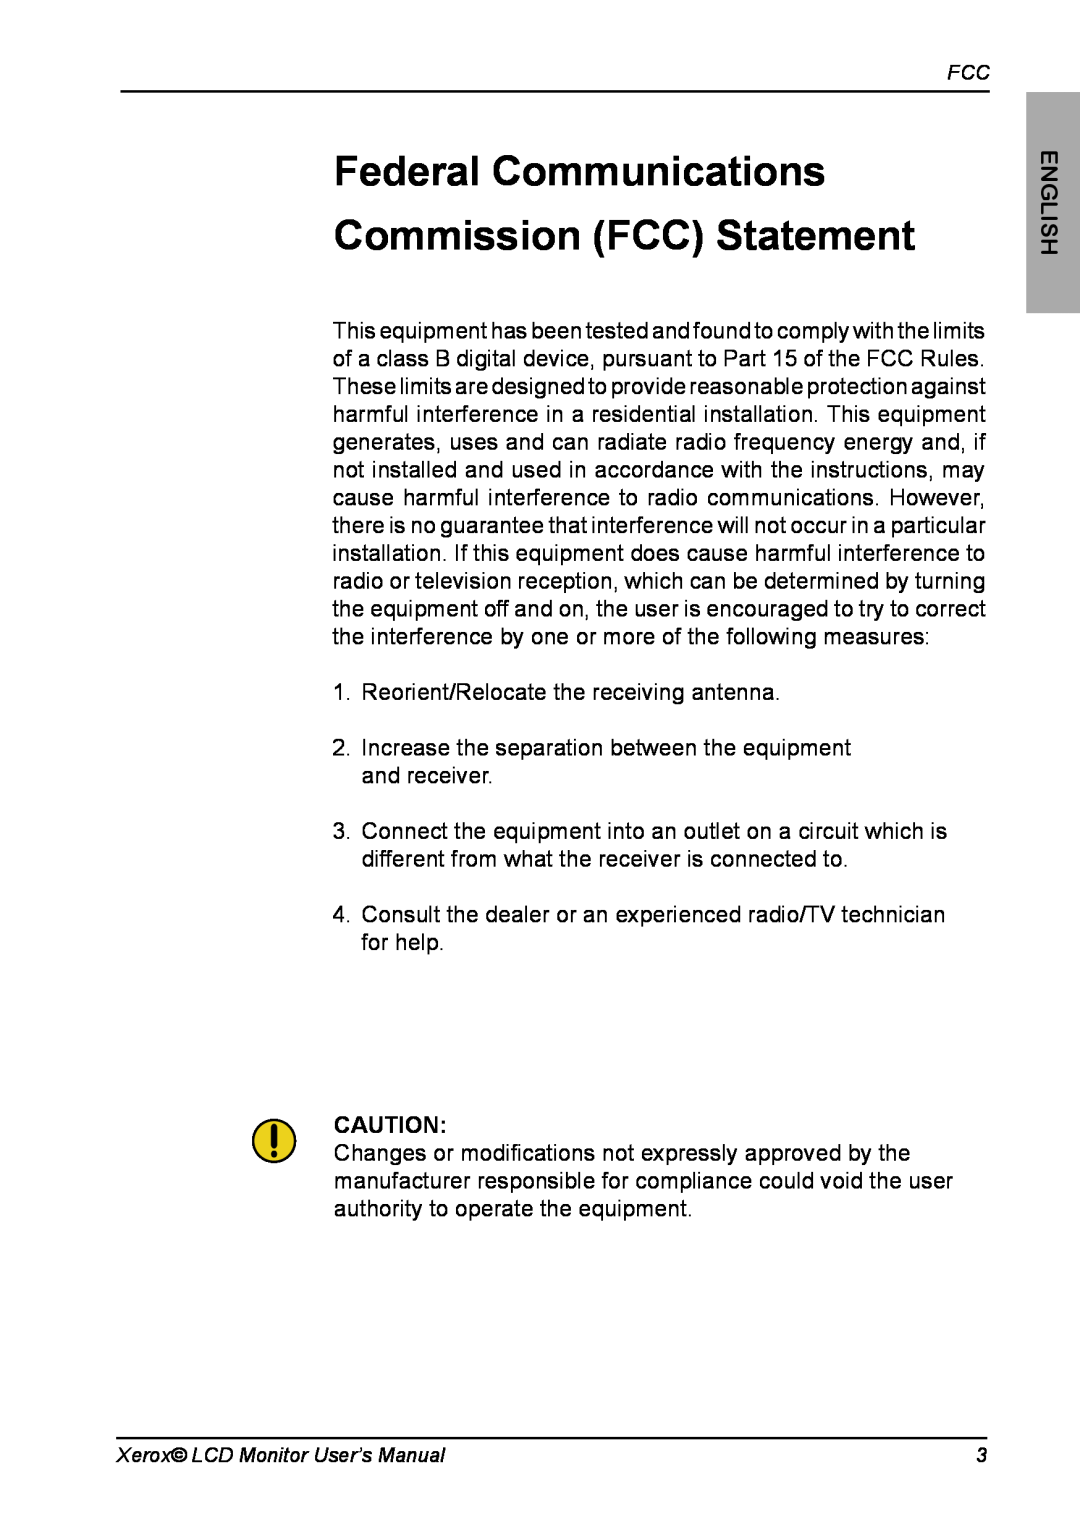 Xerox XA7-19i manual Federal Communications Commission FCC Statement, English 